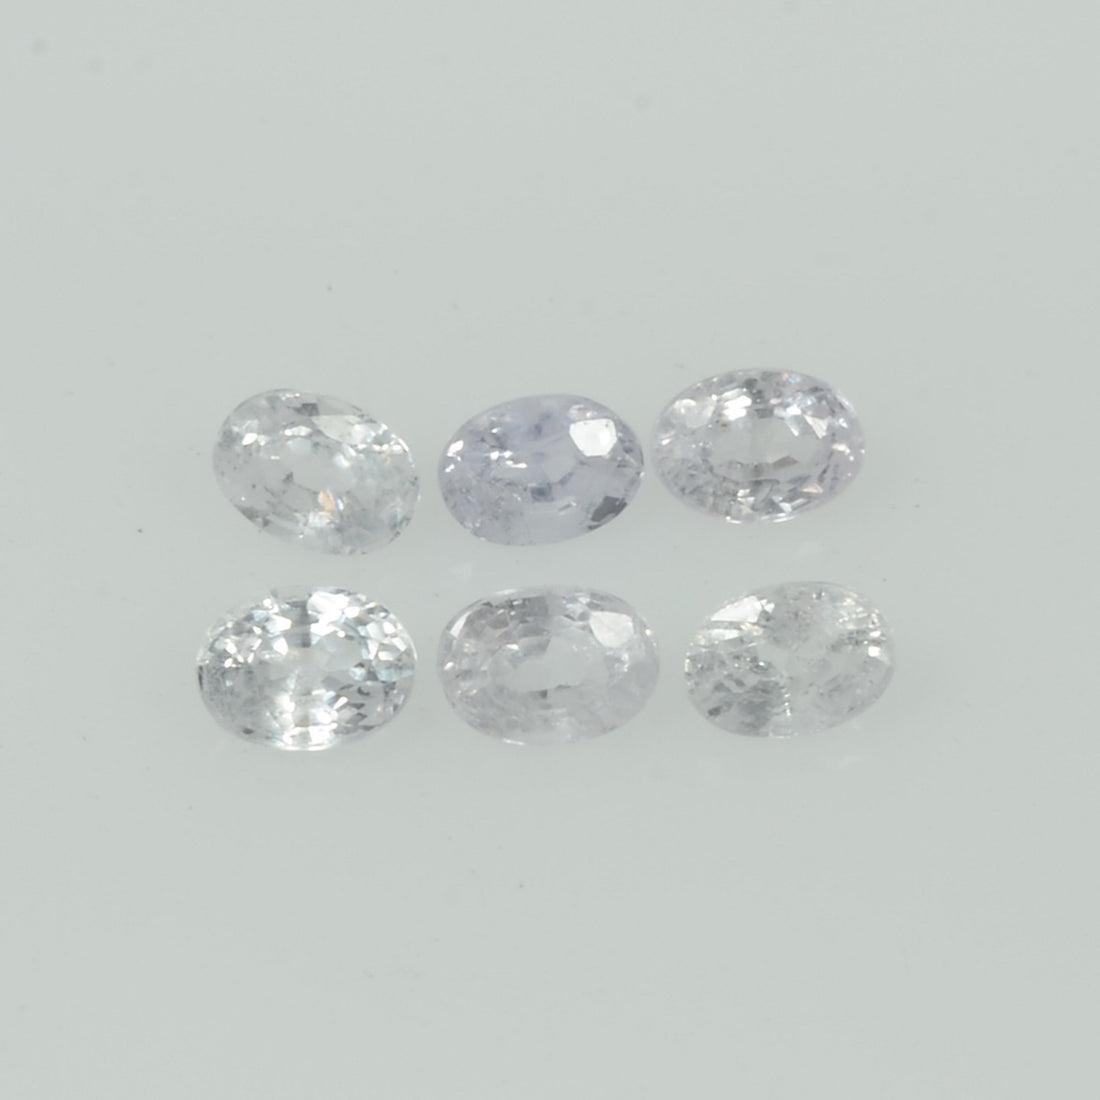 Natural White Sapphire Loose  Gemstone VS Quality  Oval Cut - Thai Gems Export Ltd.